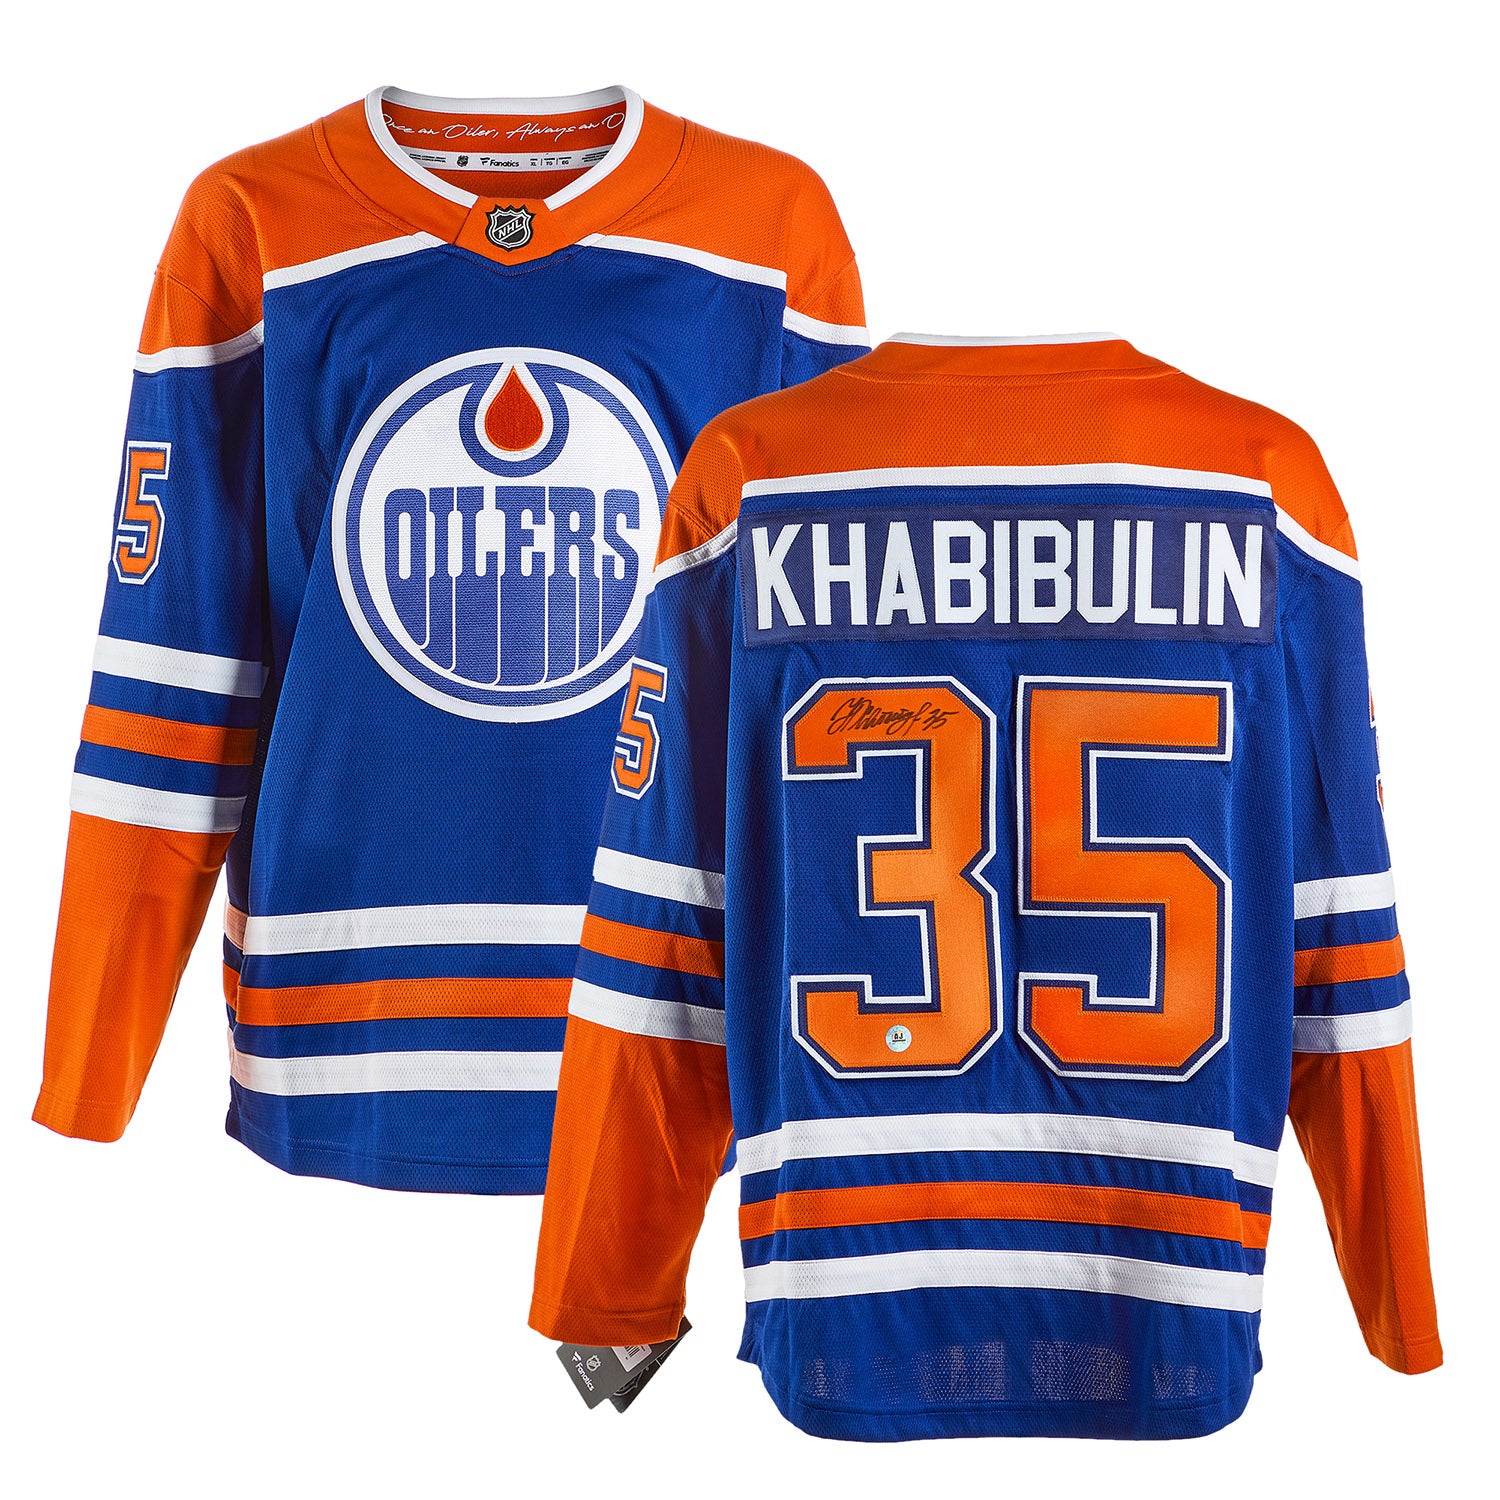 Nikolai Khabibulin Edmonton Oilers Signed Fanatics Jersey